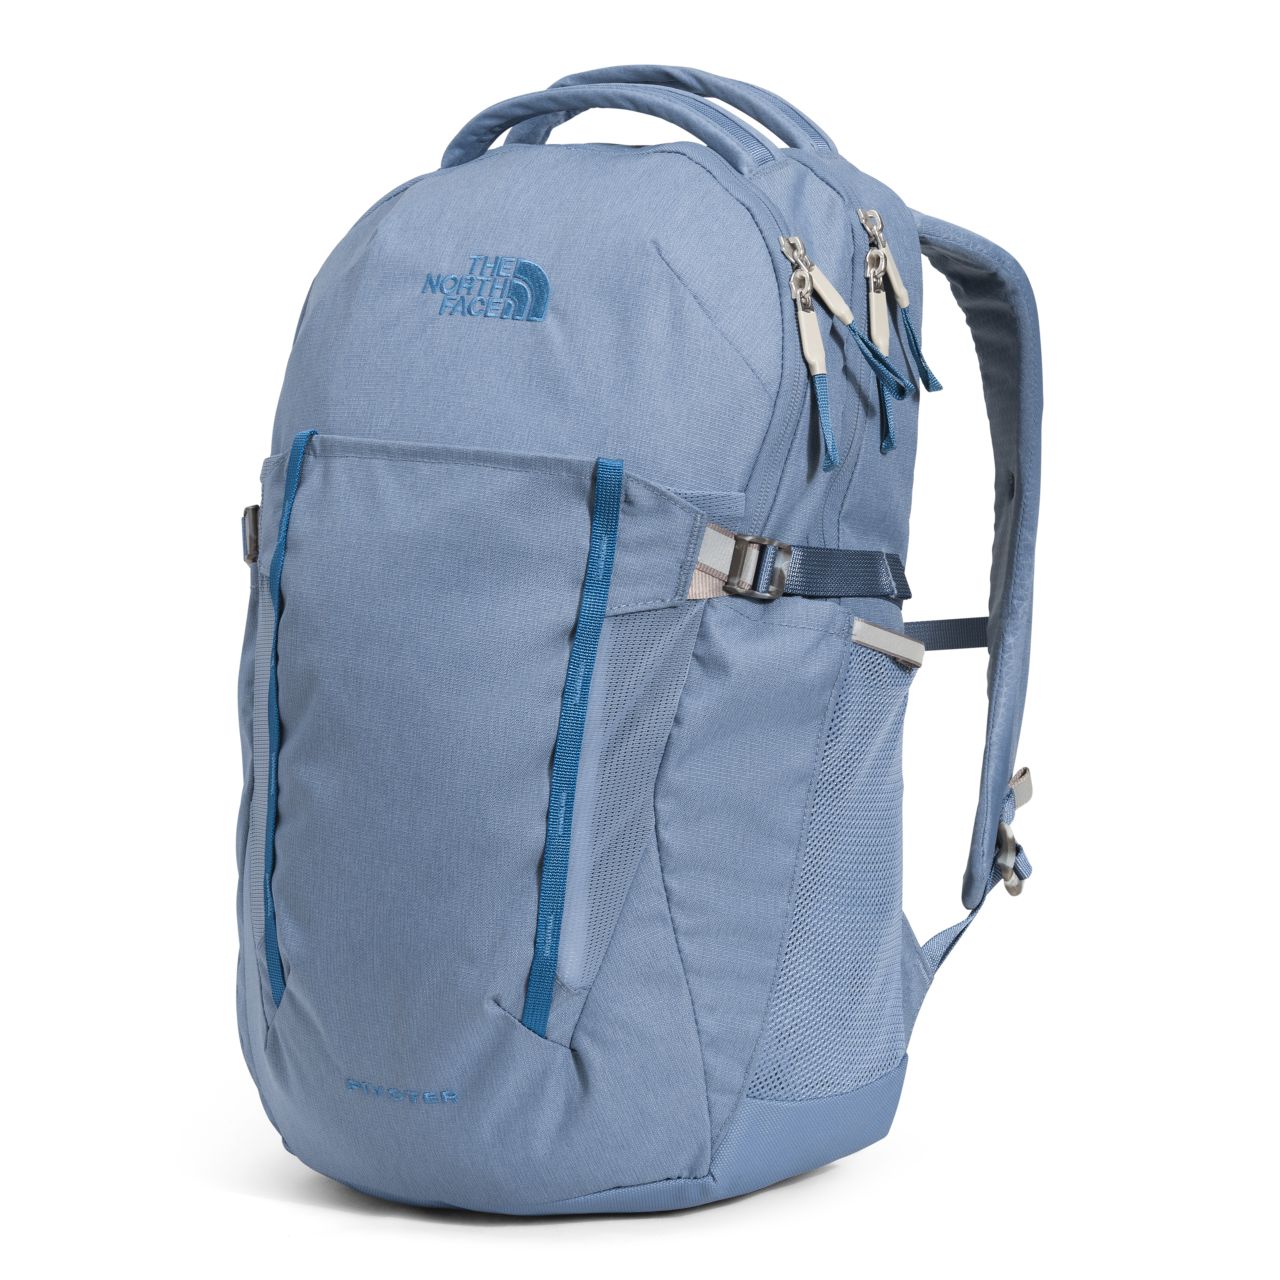 Pivoter Backpack - Women's - Folk Blue Dark Heather / Federal Blue